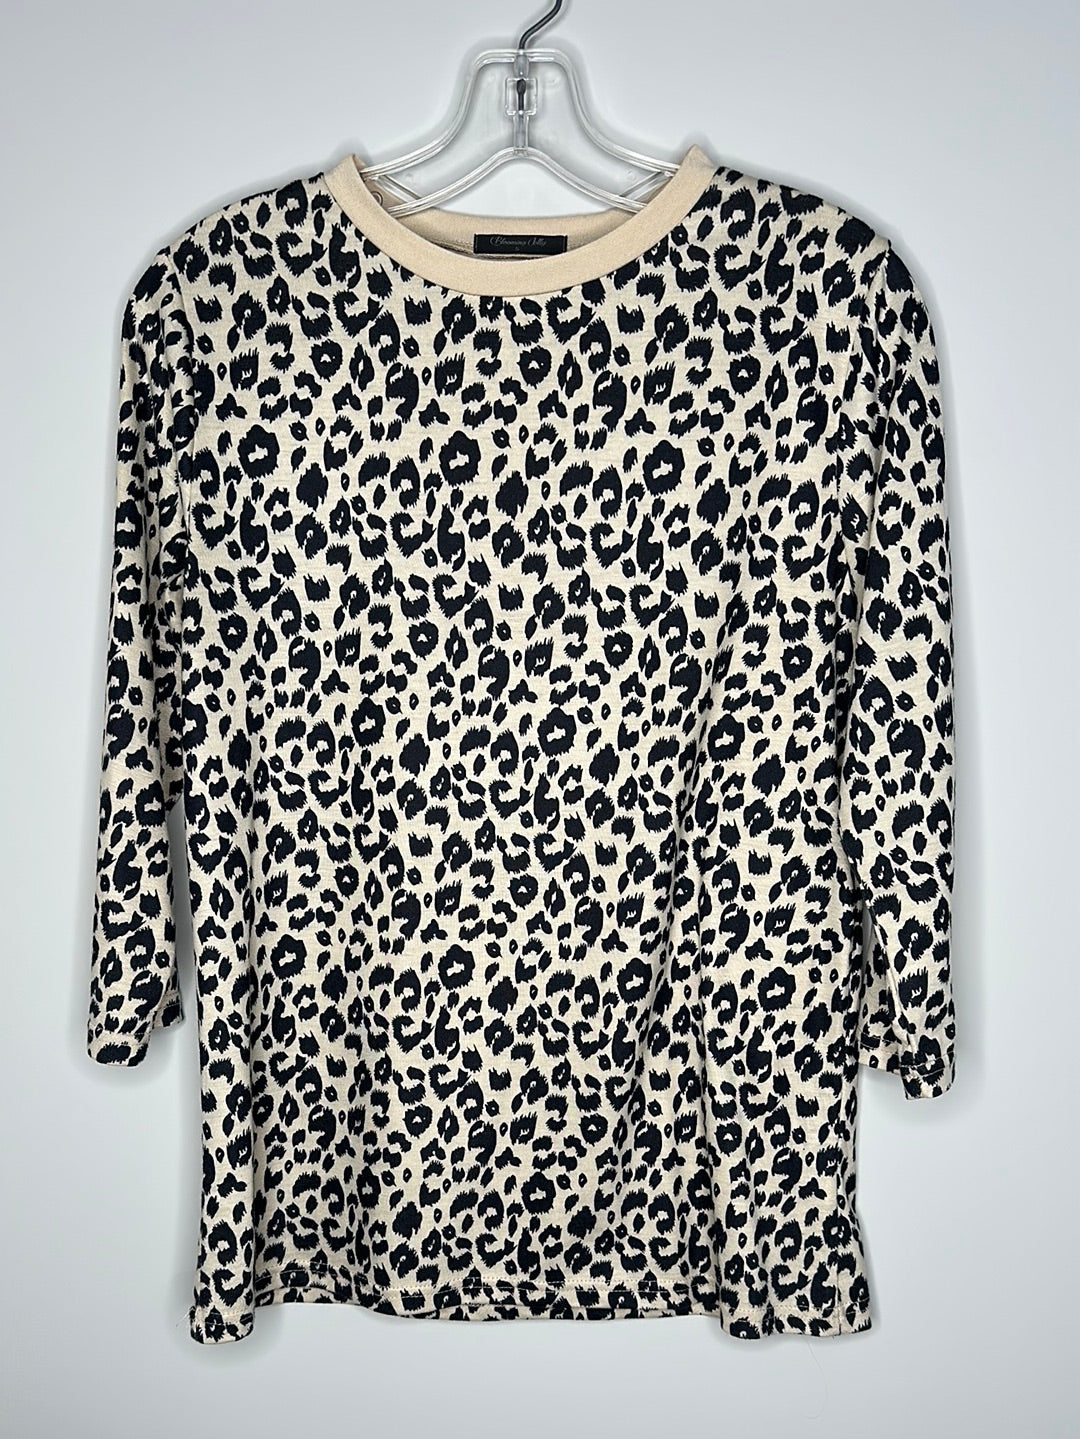 Blooming Jelly Size S Tan w/Black Cheetah Print 3/4 Sleeve Top (runs large)